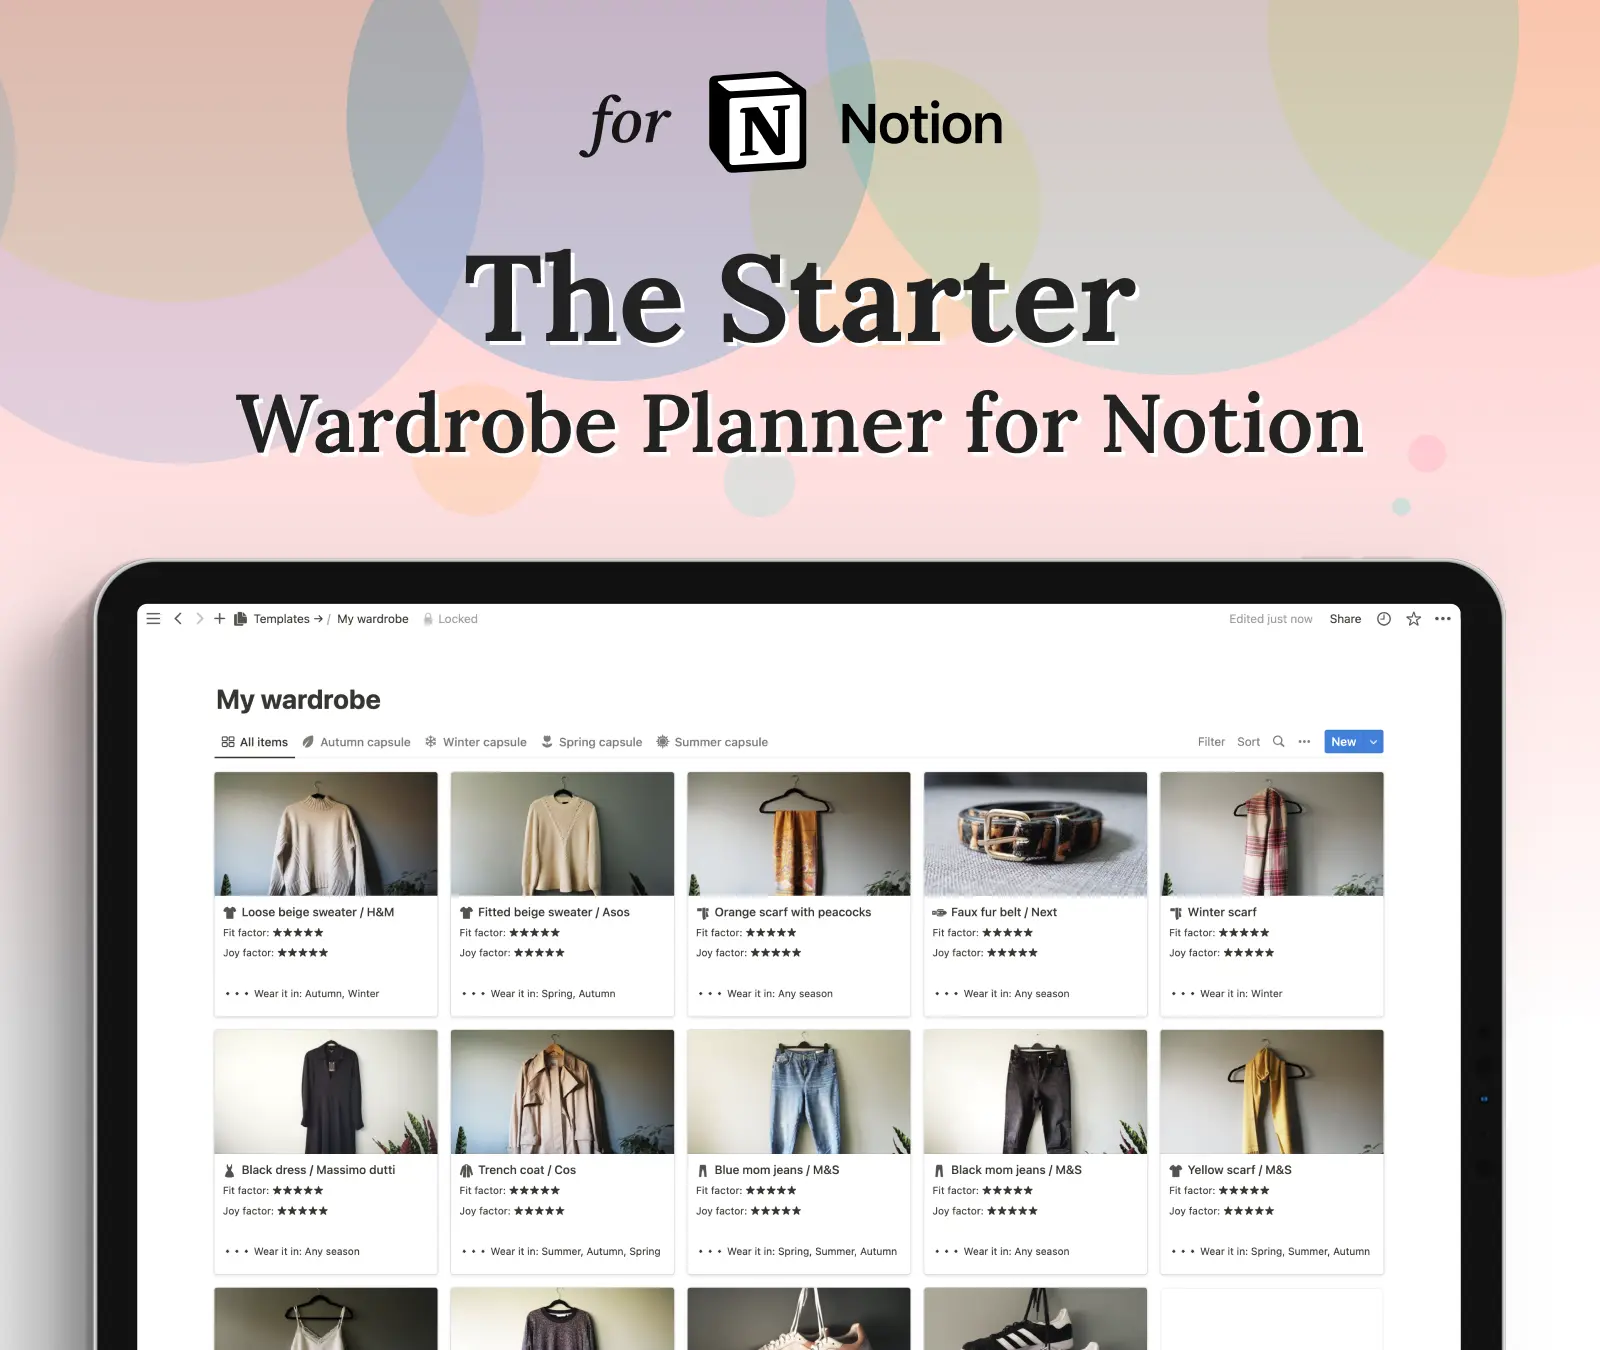 The starter wardrobe planner for Notion